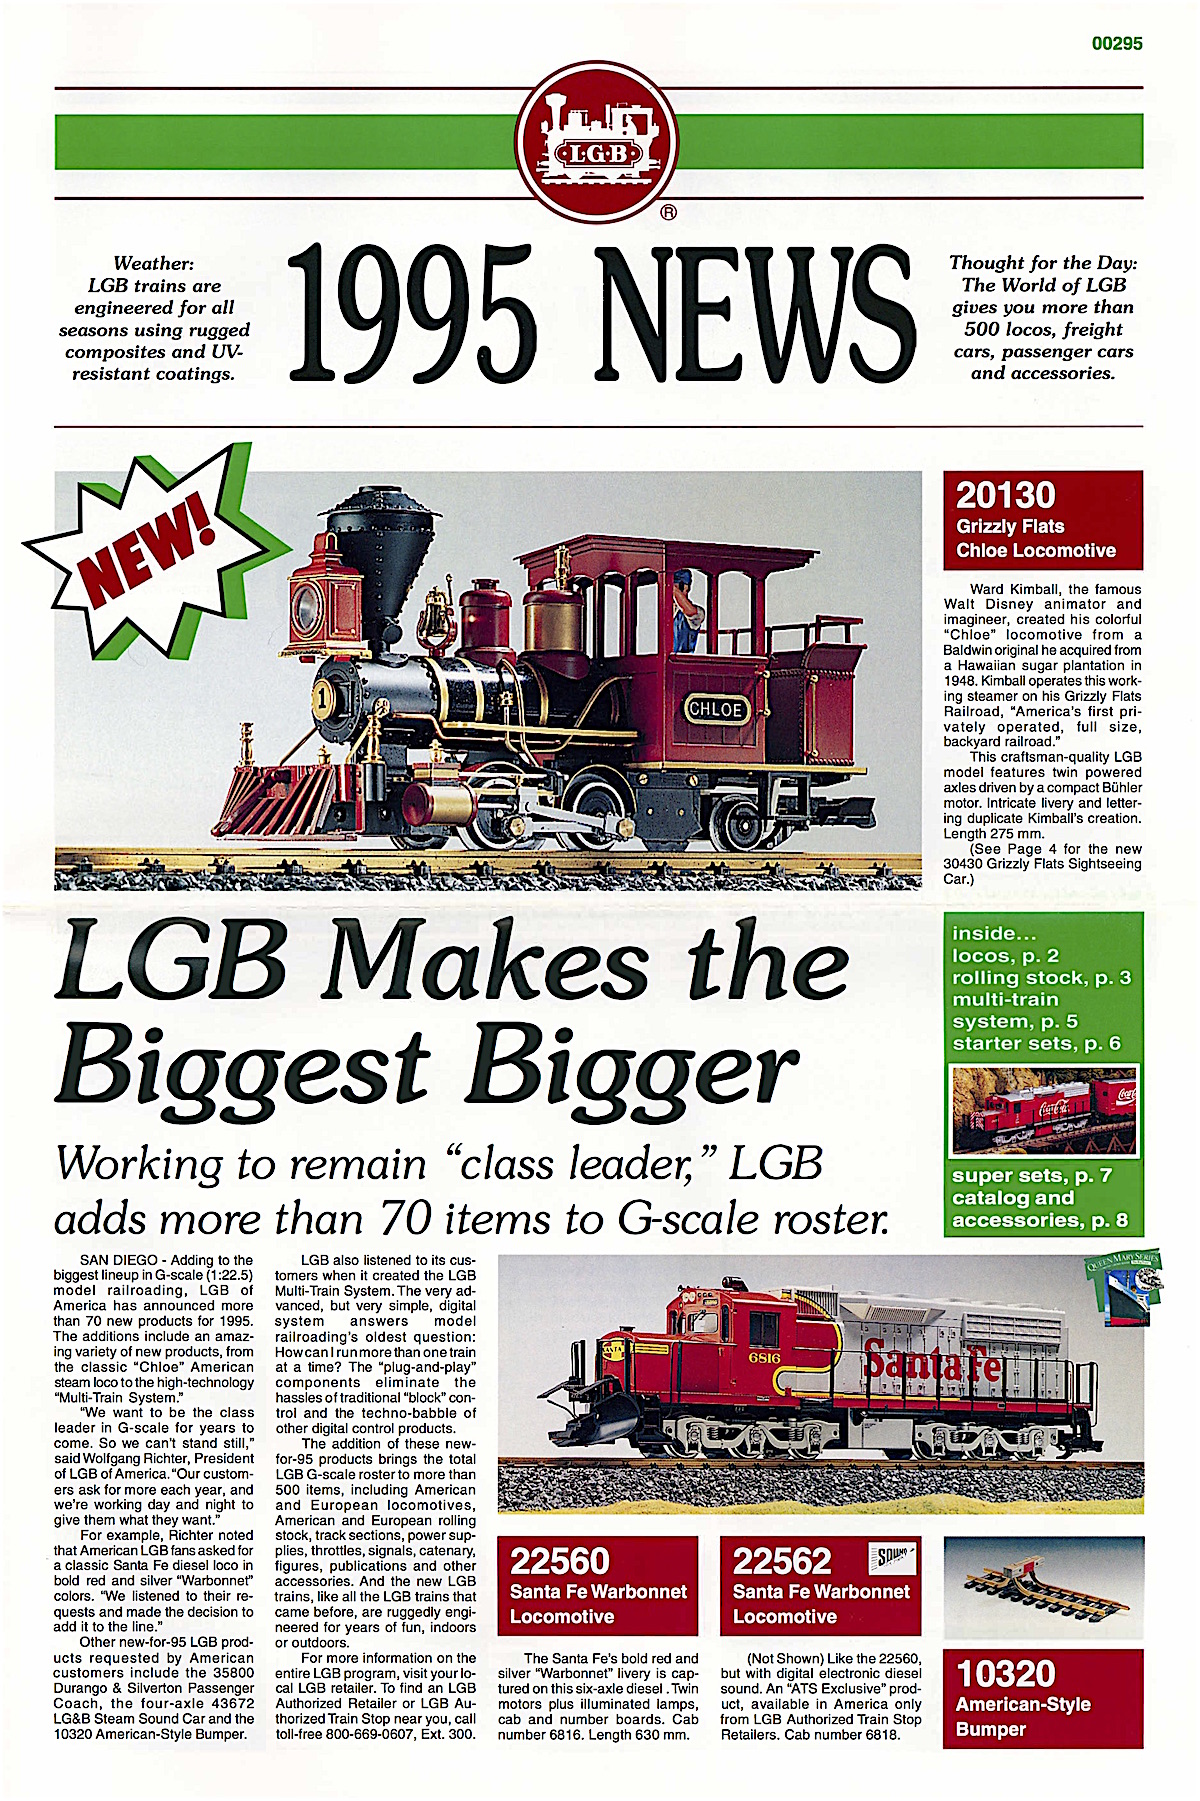 LGB Neuheiten (New Items) 1995 (for USA)